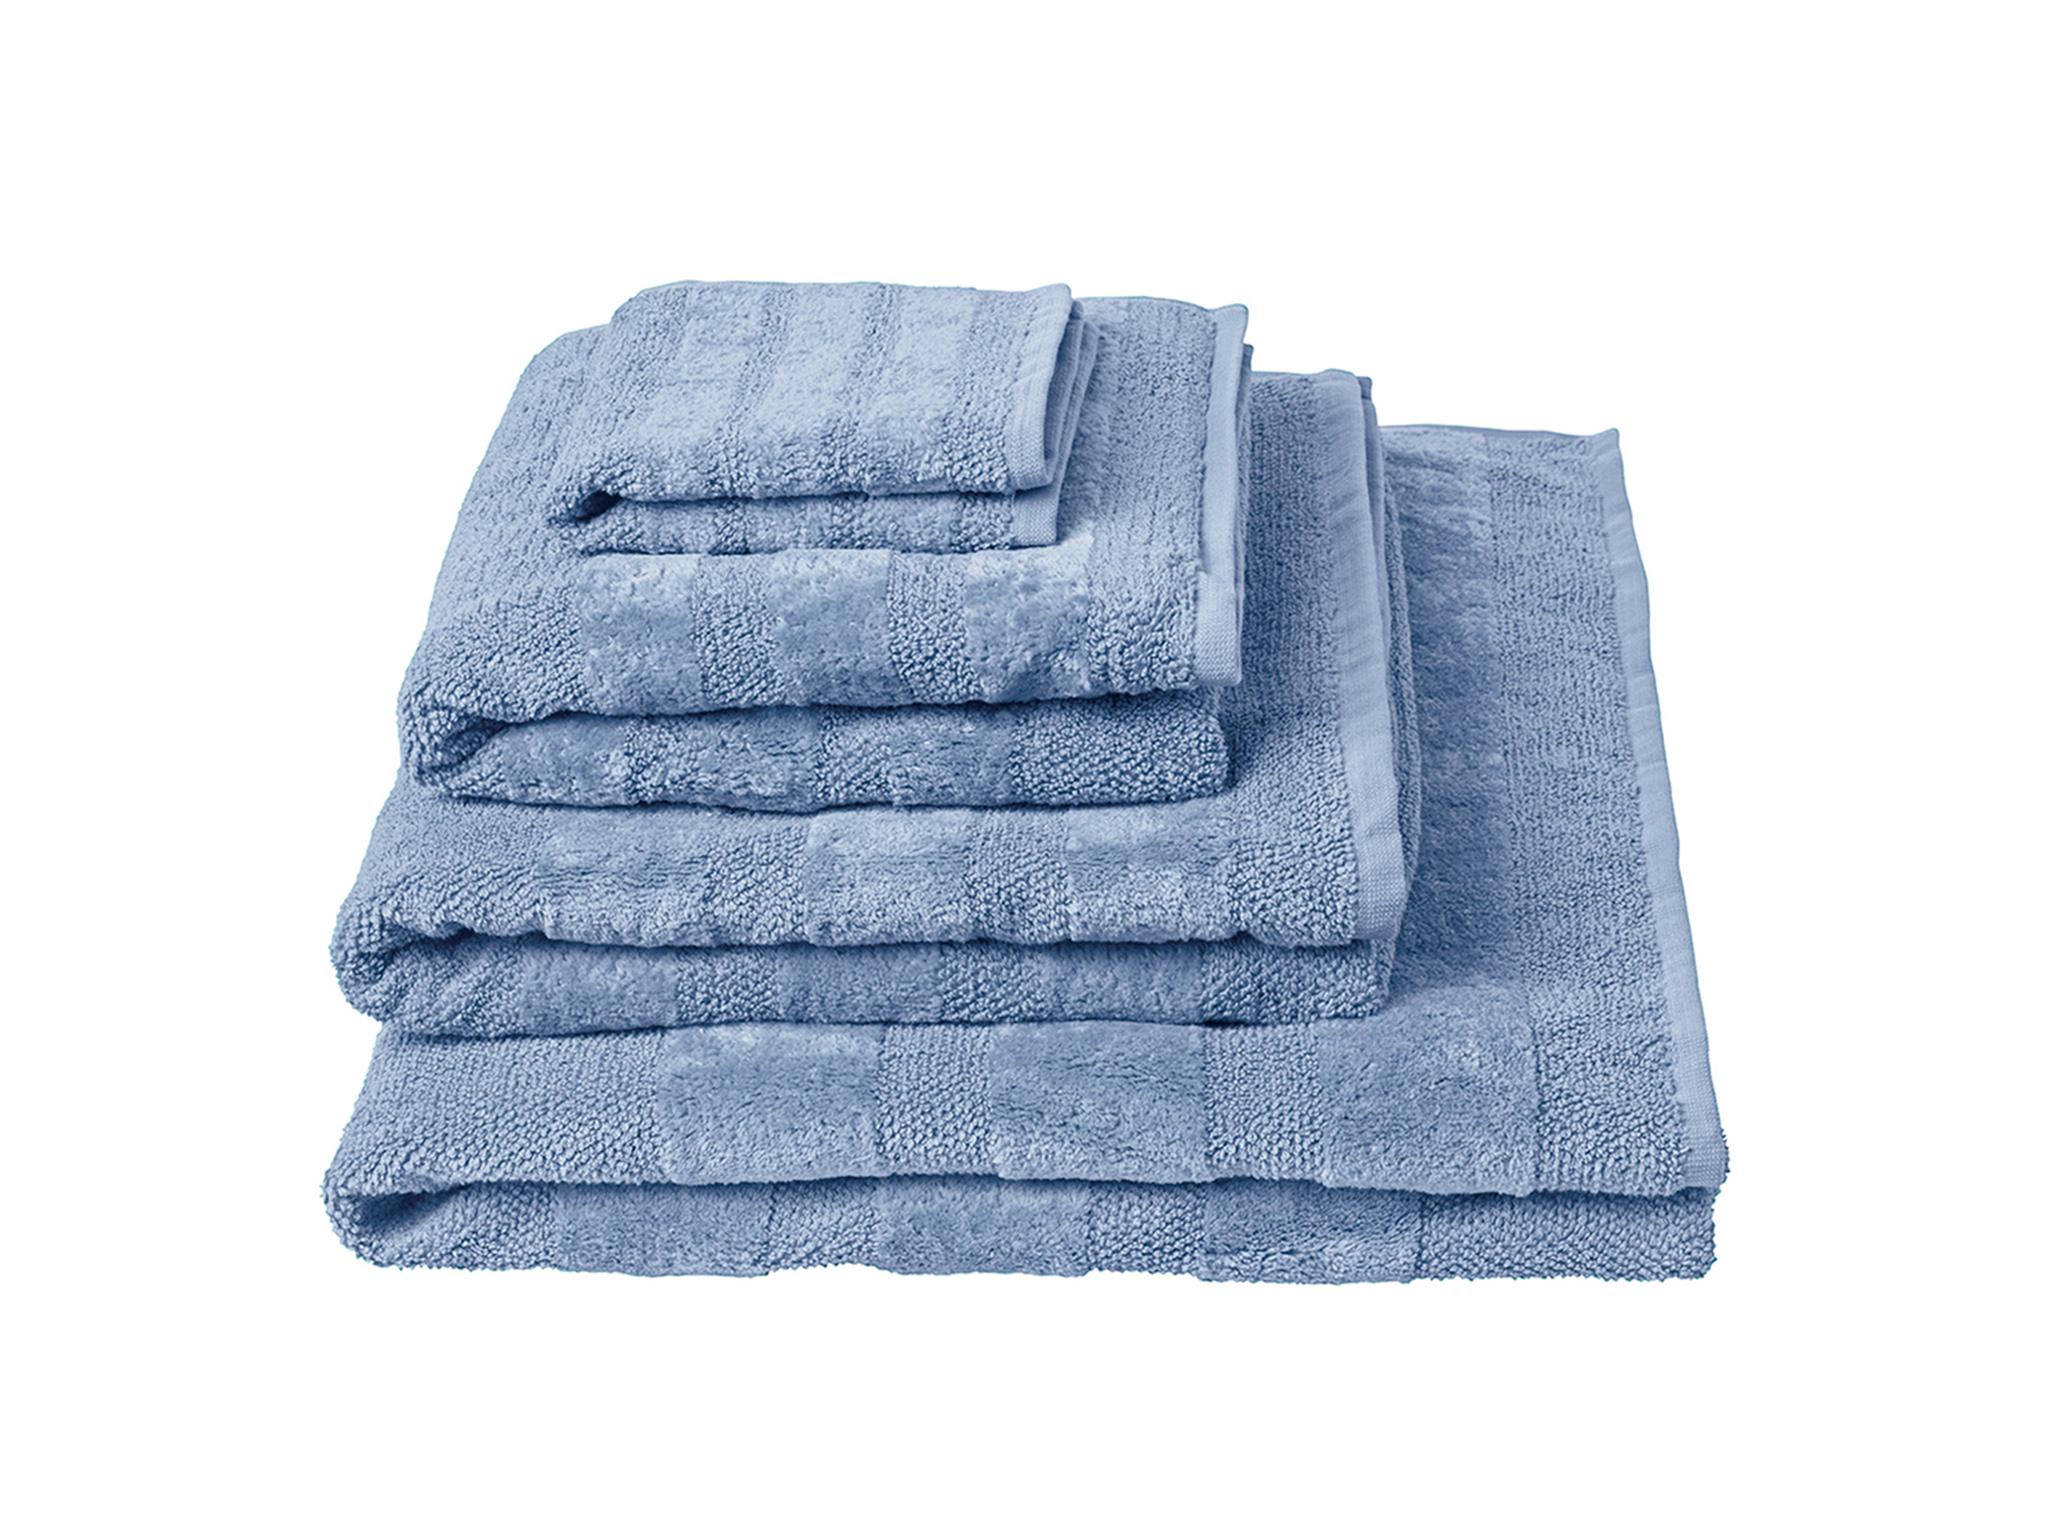 in 10 colors JH/&M 10 Piece 100/% Cotton Towel Bale Set and 4 Face Towel 4 Hand Towels Black 2 Bath Towels